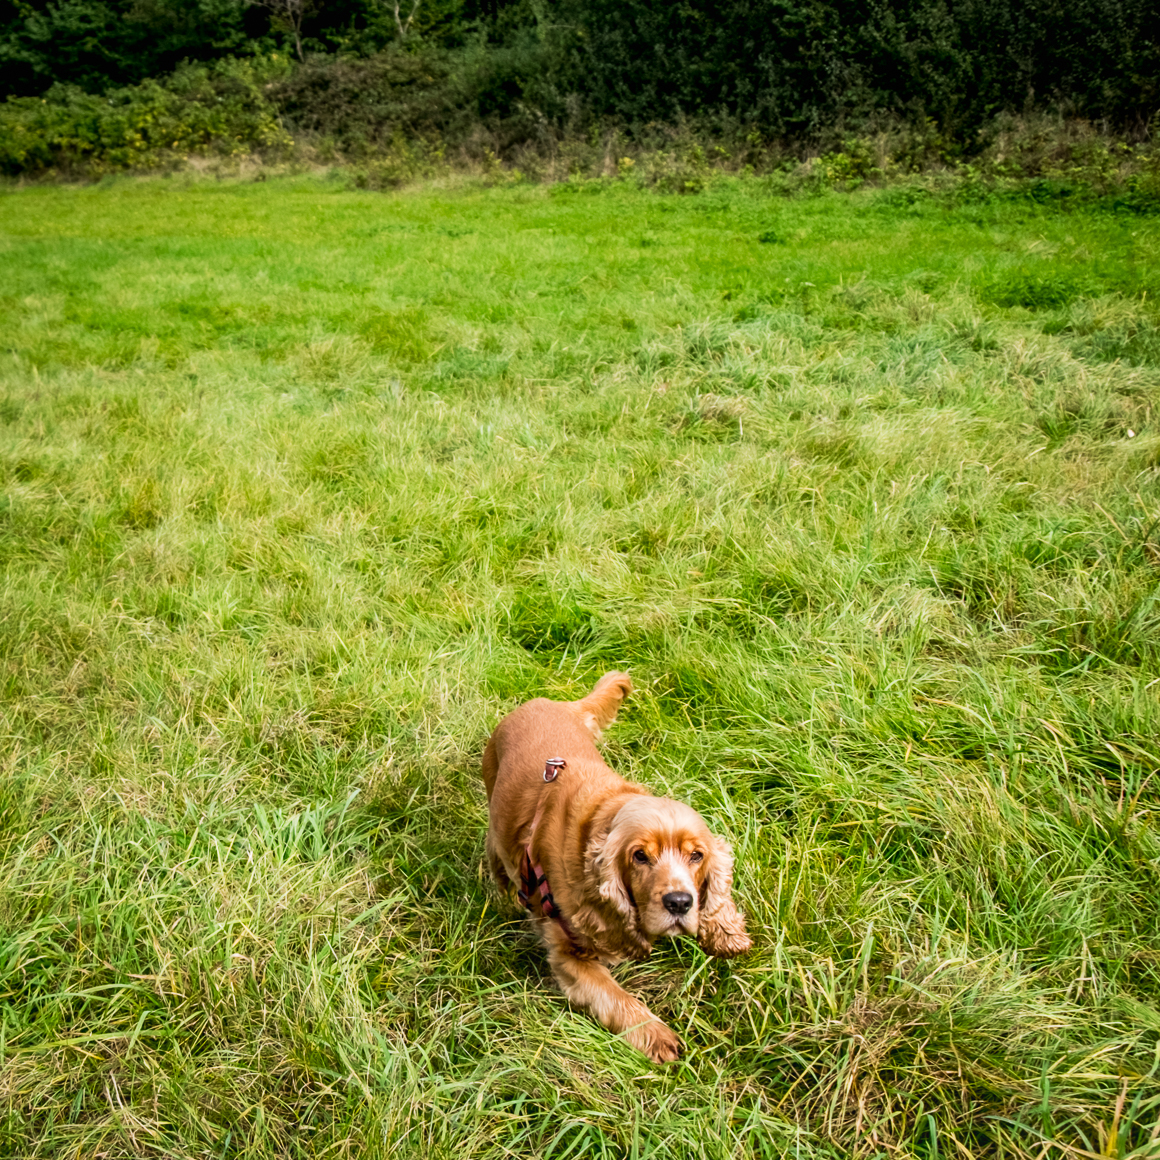 20161012_Hillingdon_Celandine-Route_Dog-in-the-grass